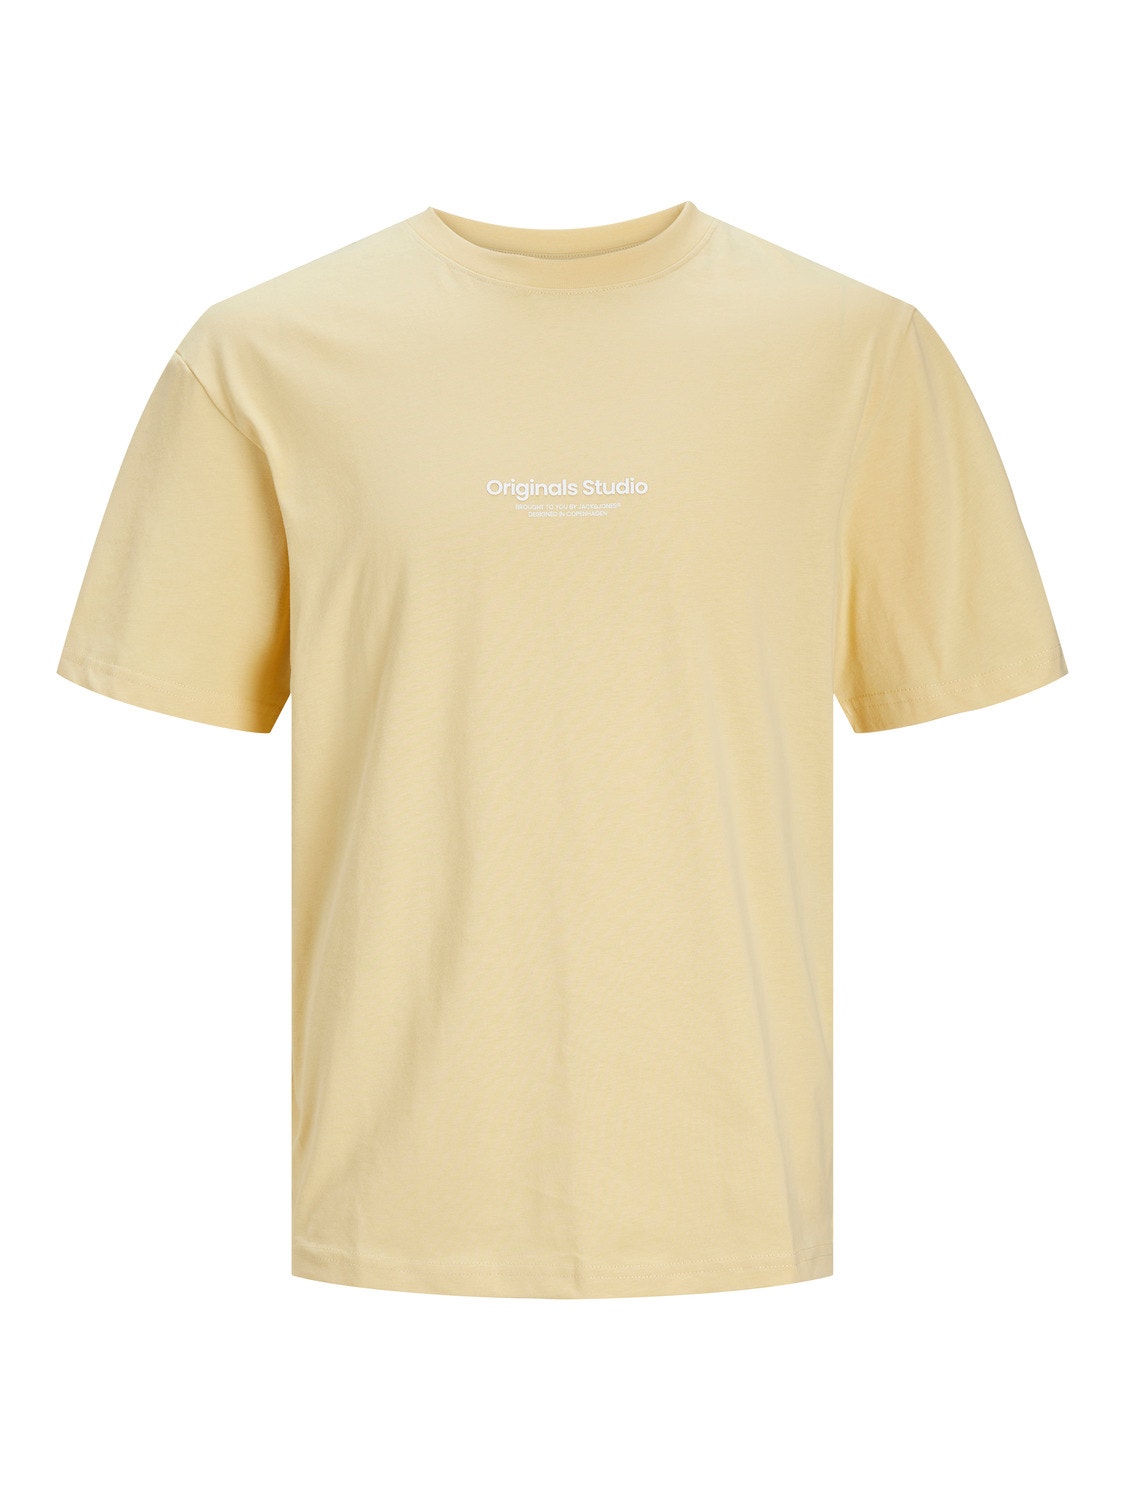 Jack & Jones T-shirt Imprimé Col rond -Italian Straw - 12240121